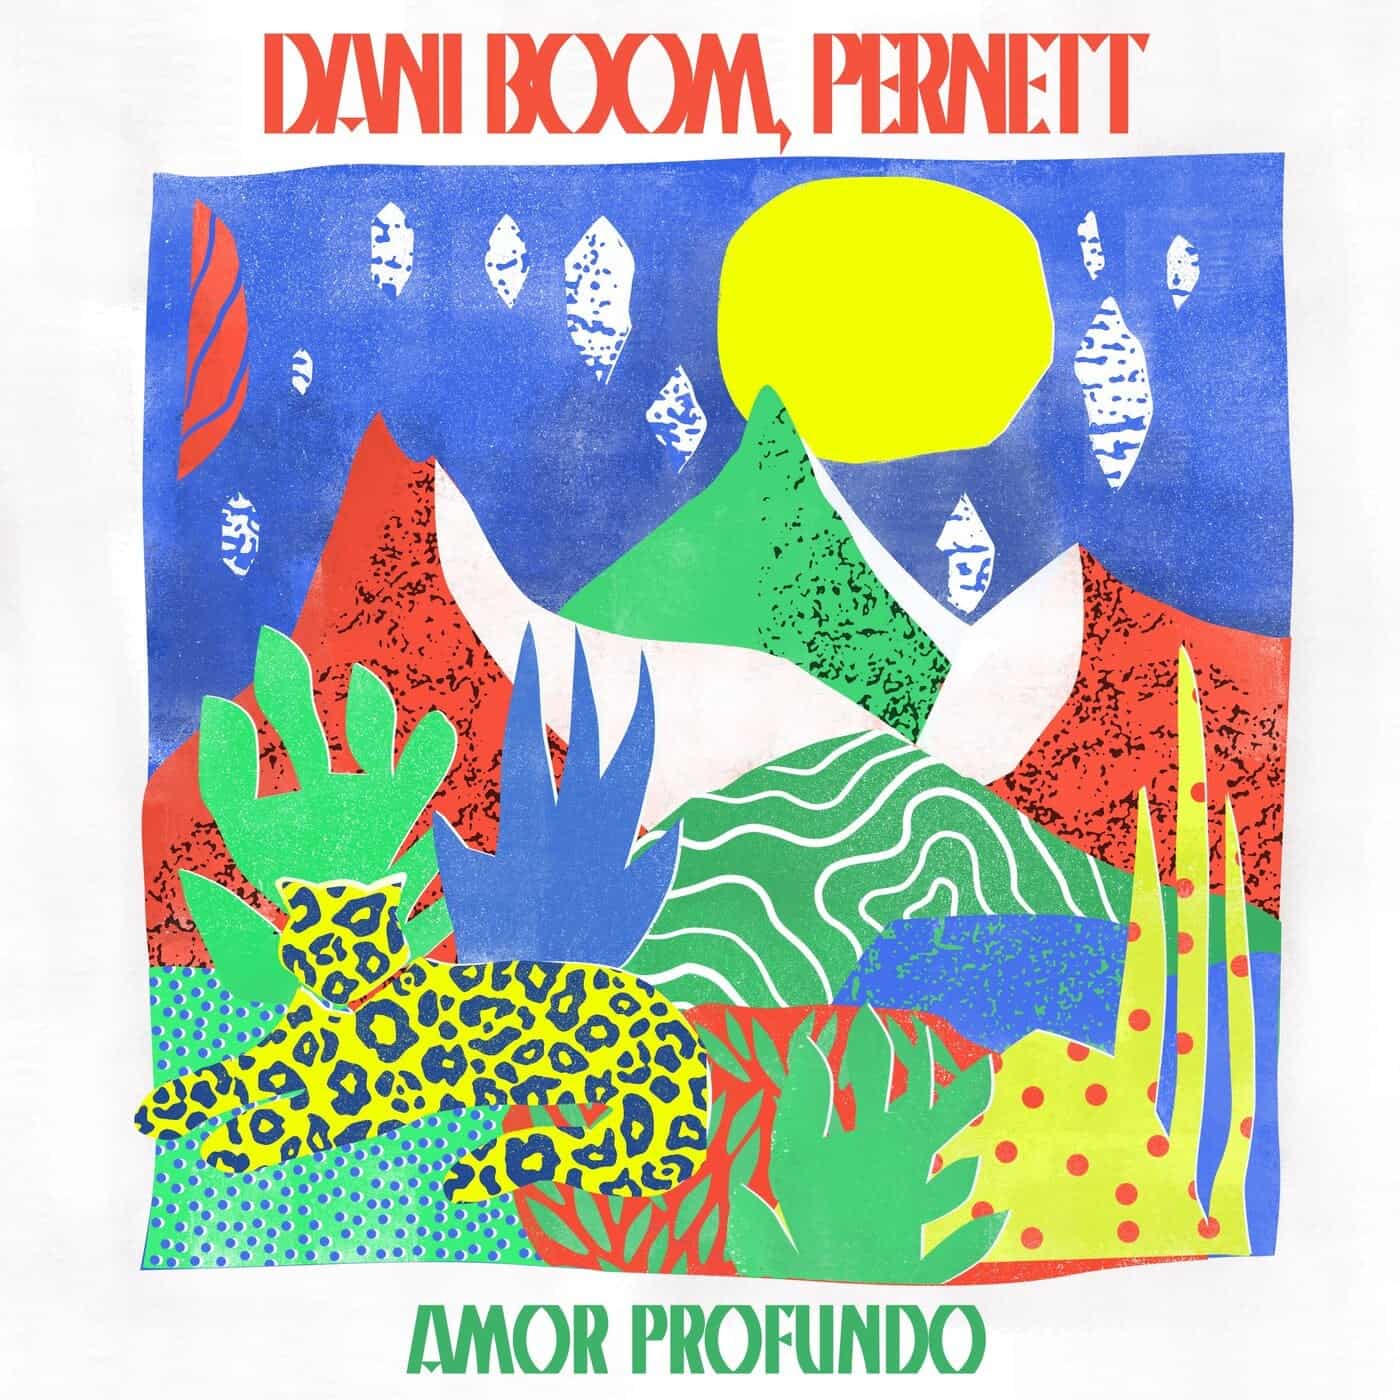 Download Pernett, Dani Boom - Amor Profundo on Electrobuzz